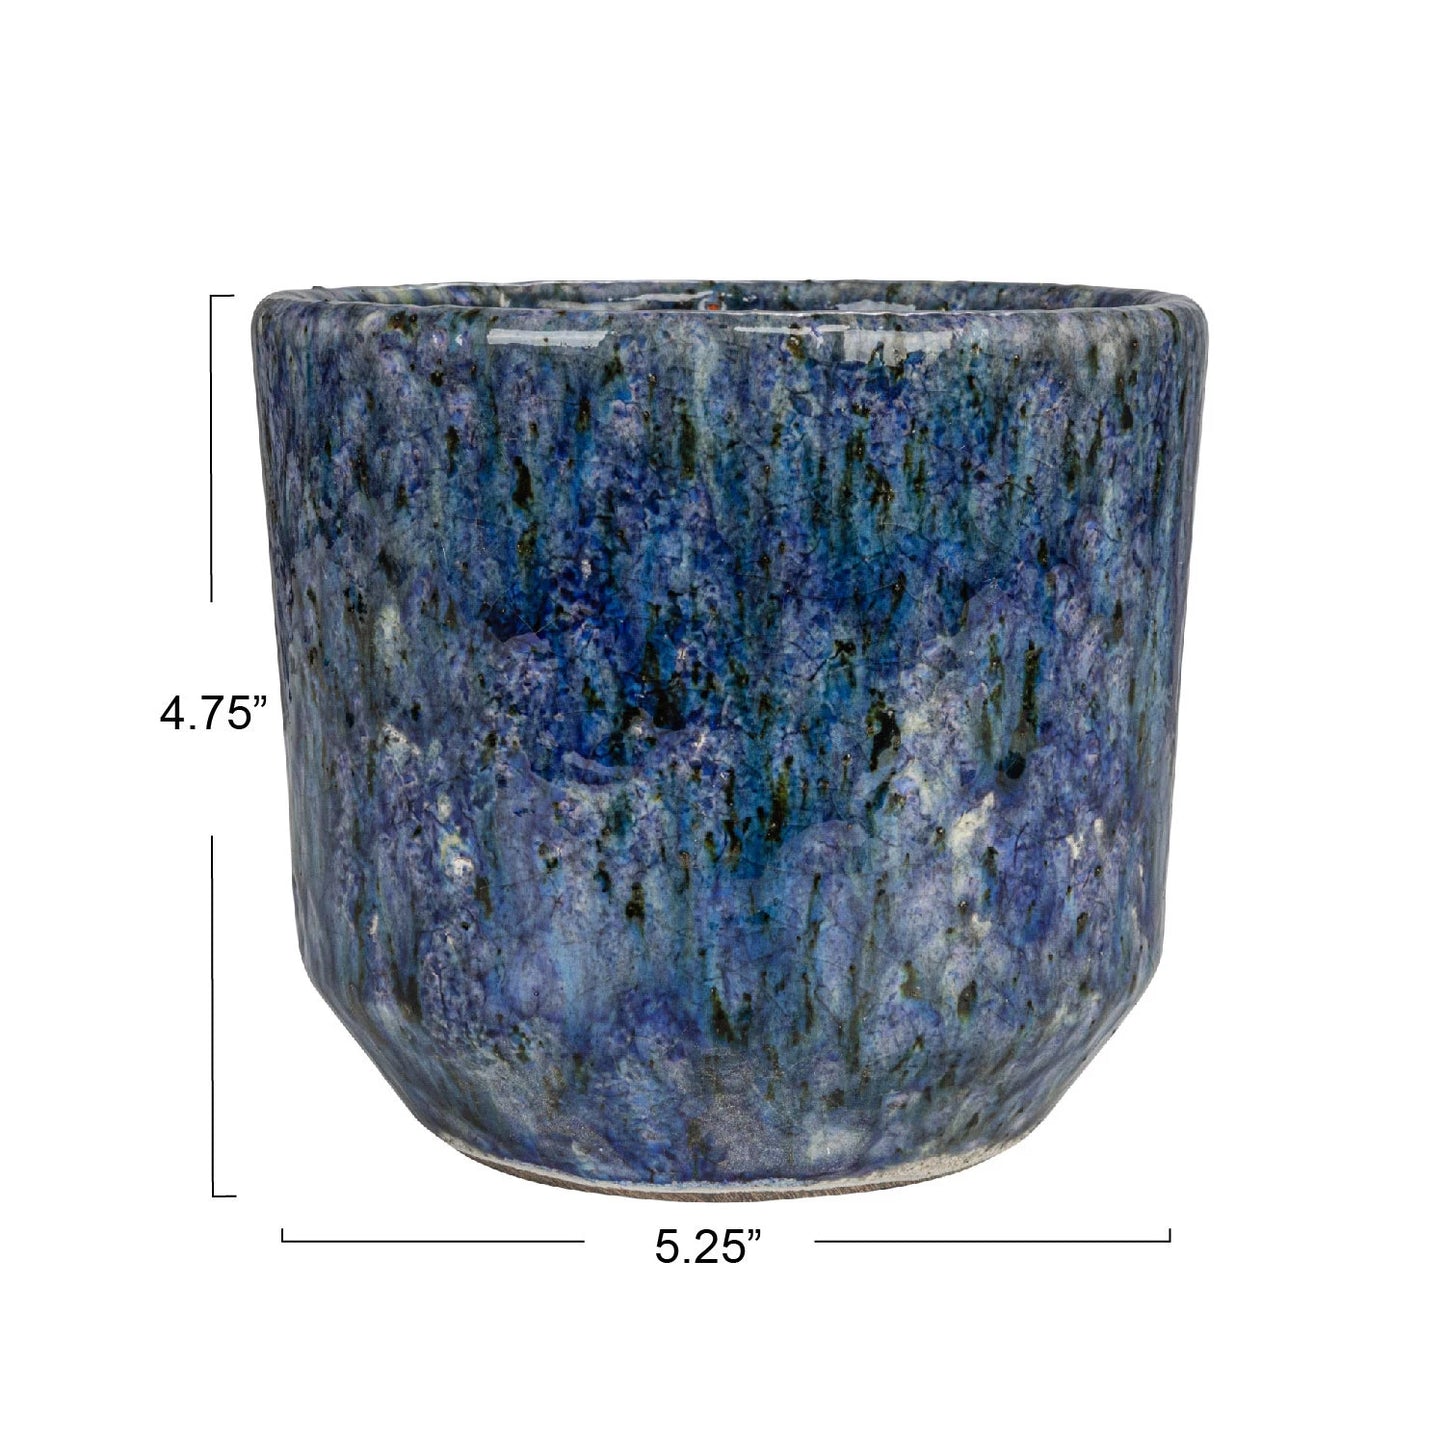 Crackle Glaze Terracotta Planter- Blue